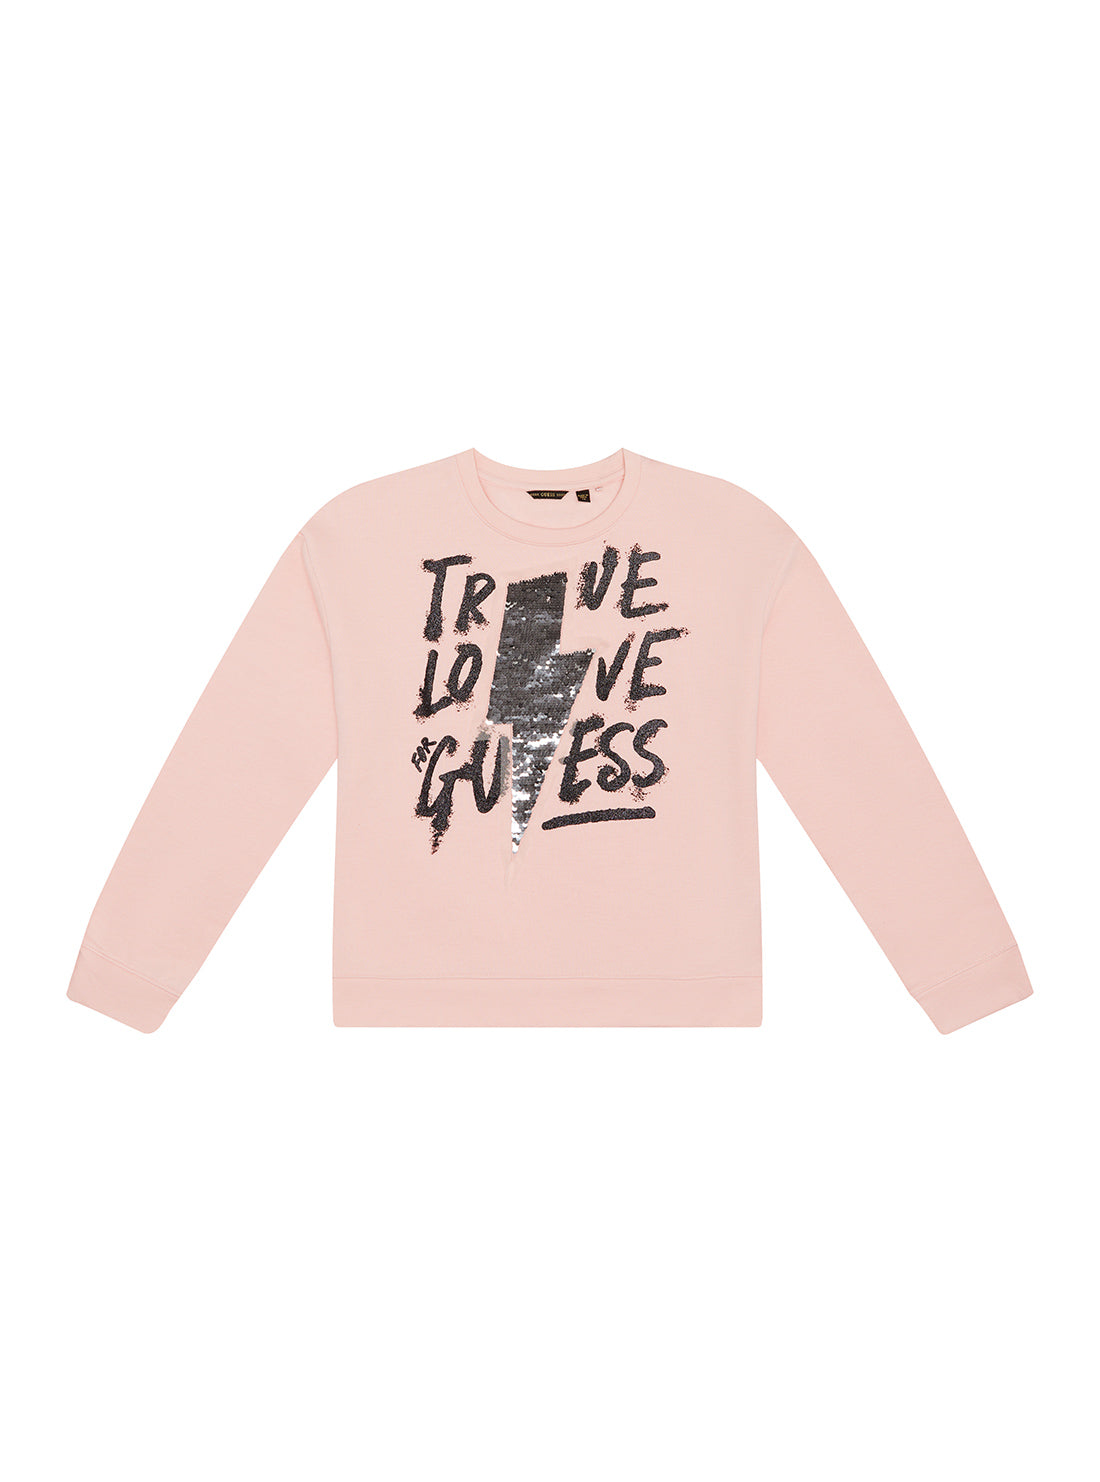 GUESS Big Girls Pink Palm Tree Active T-Shirt (7-16) J1YA07D46Q0 Front View